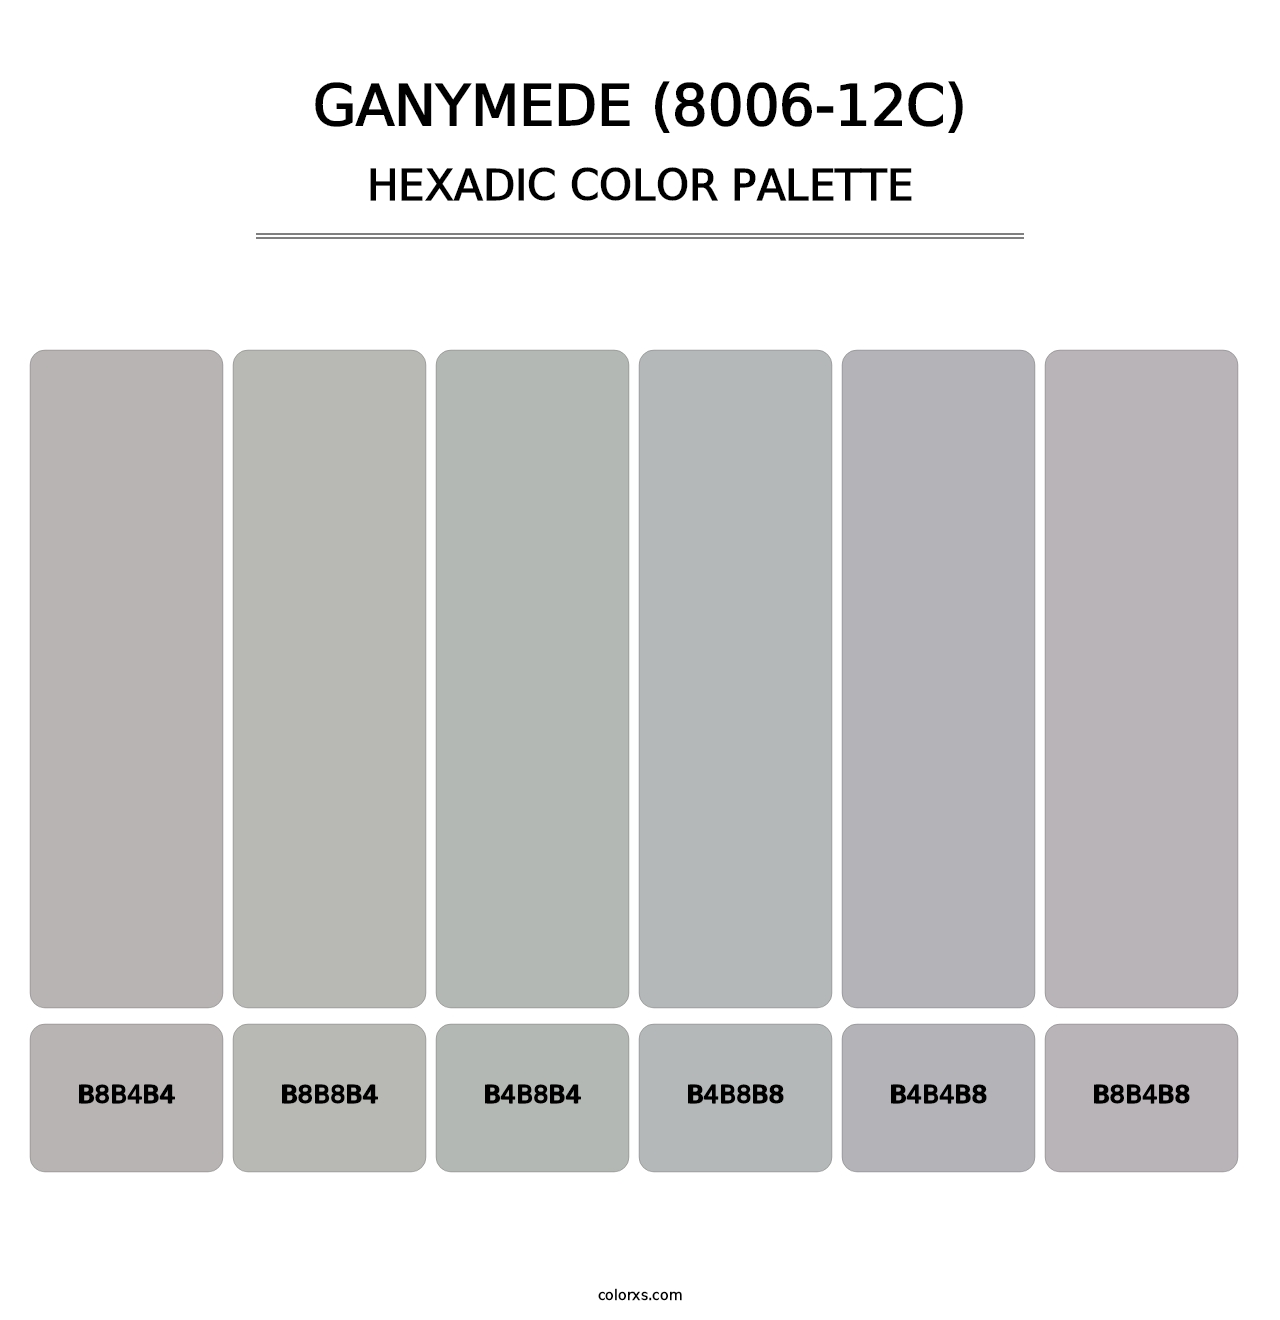 Ganymede (8006-12C) - Hexadic Color Palette